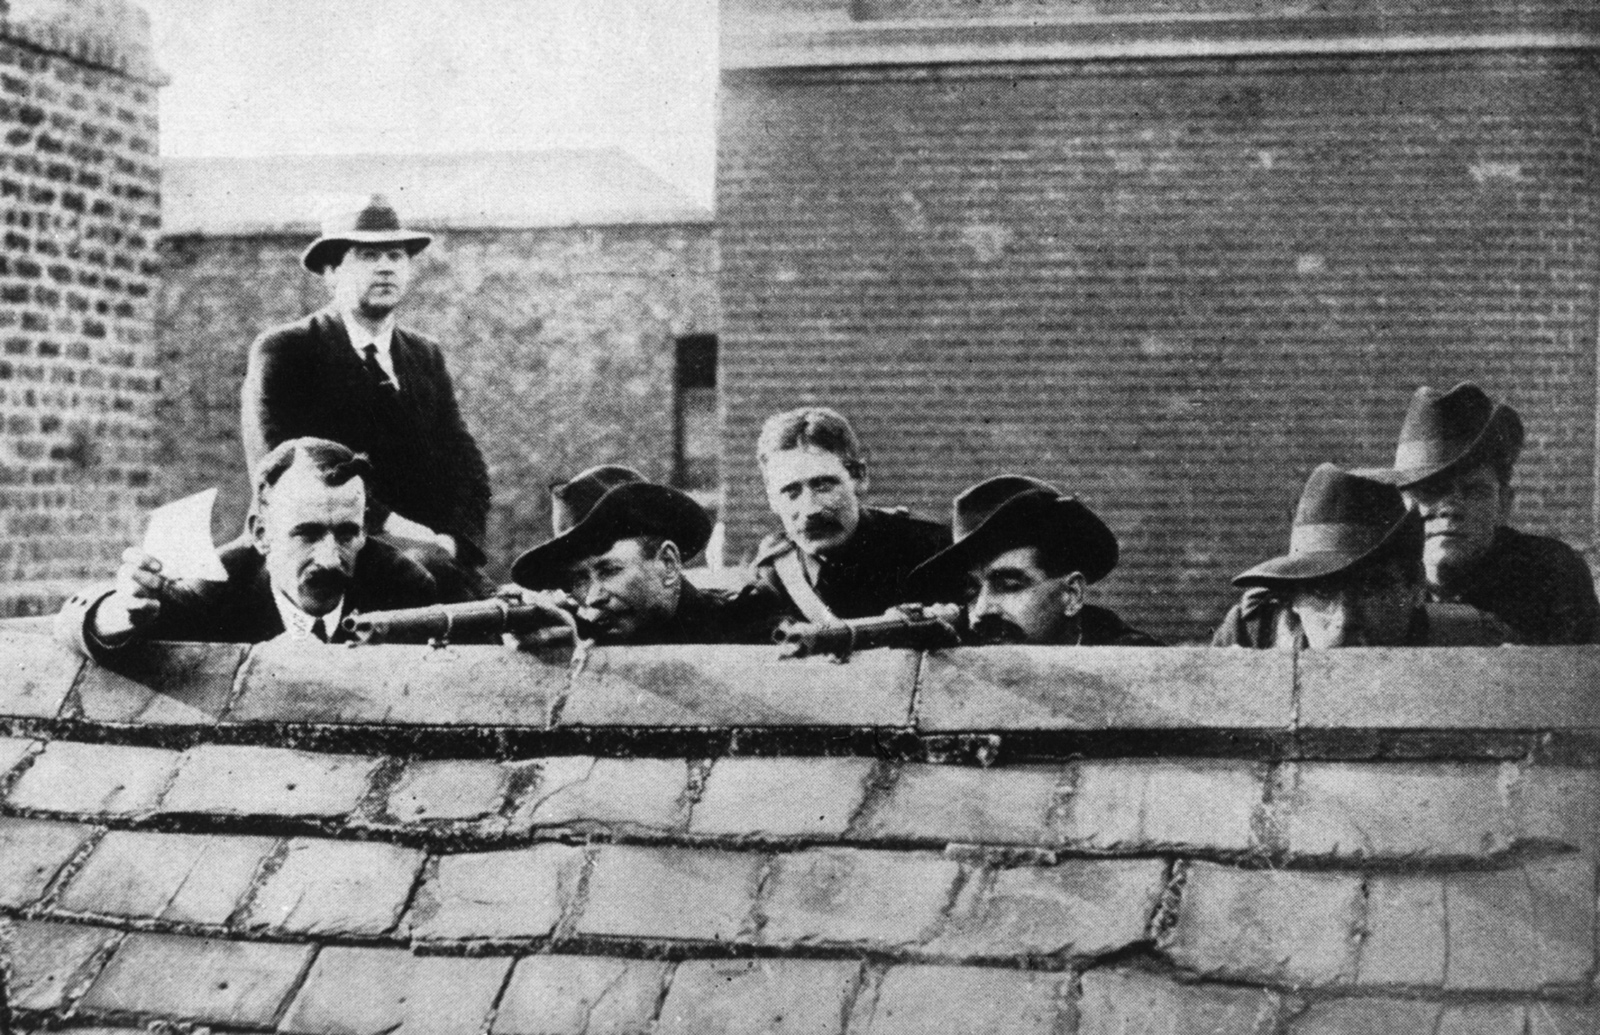 Irish rebels during the Easter Rising, 1916